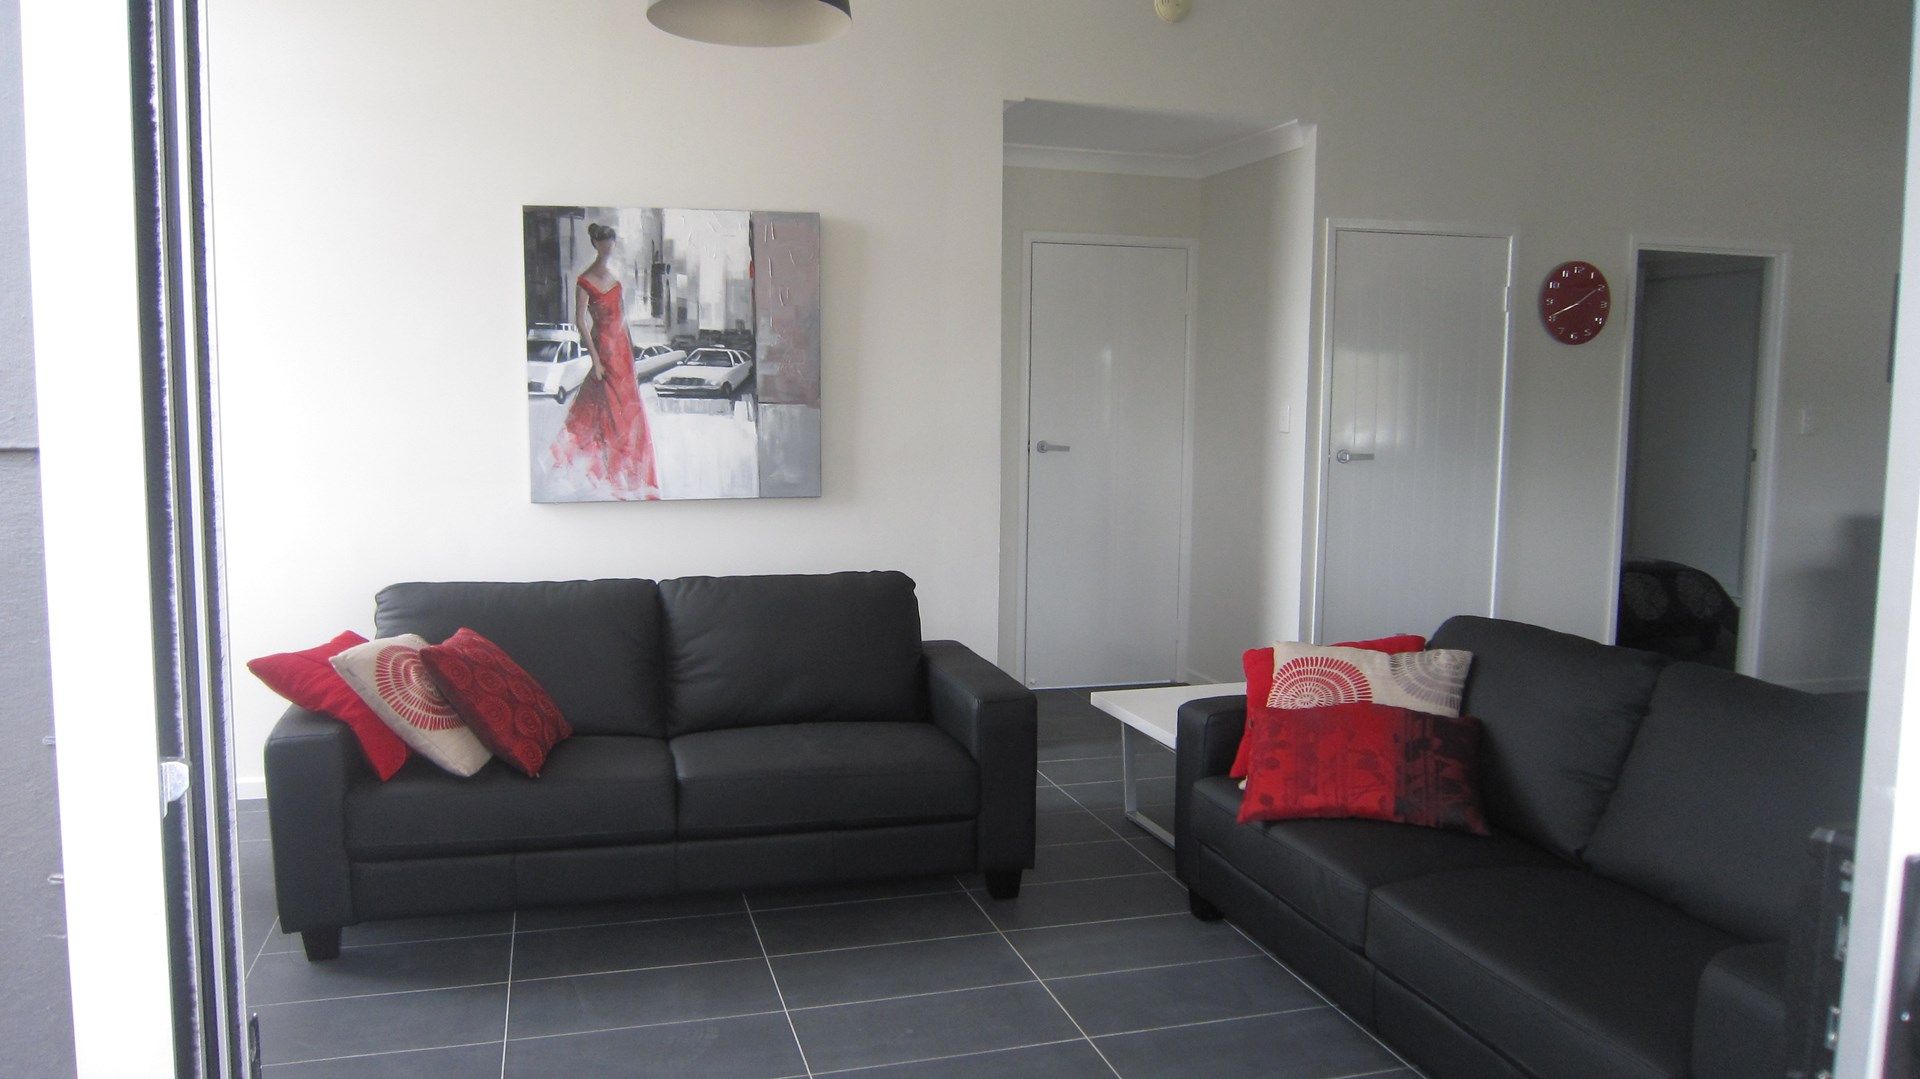 2 bedrooms Apartment / Unit / Flat in 1/105 Bowen Street ROMA QLD, 4455